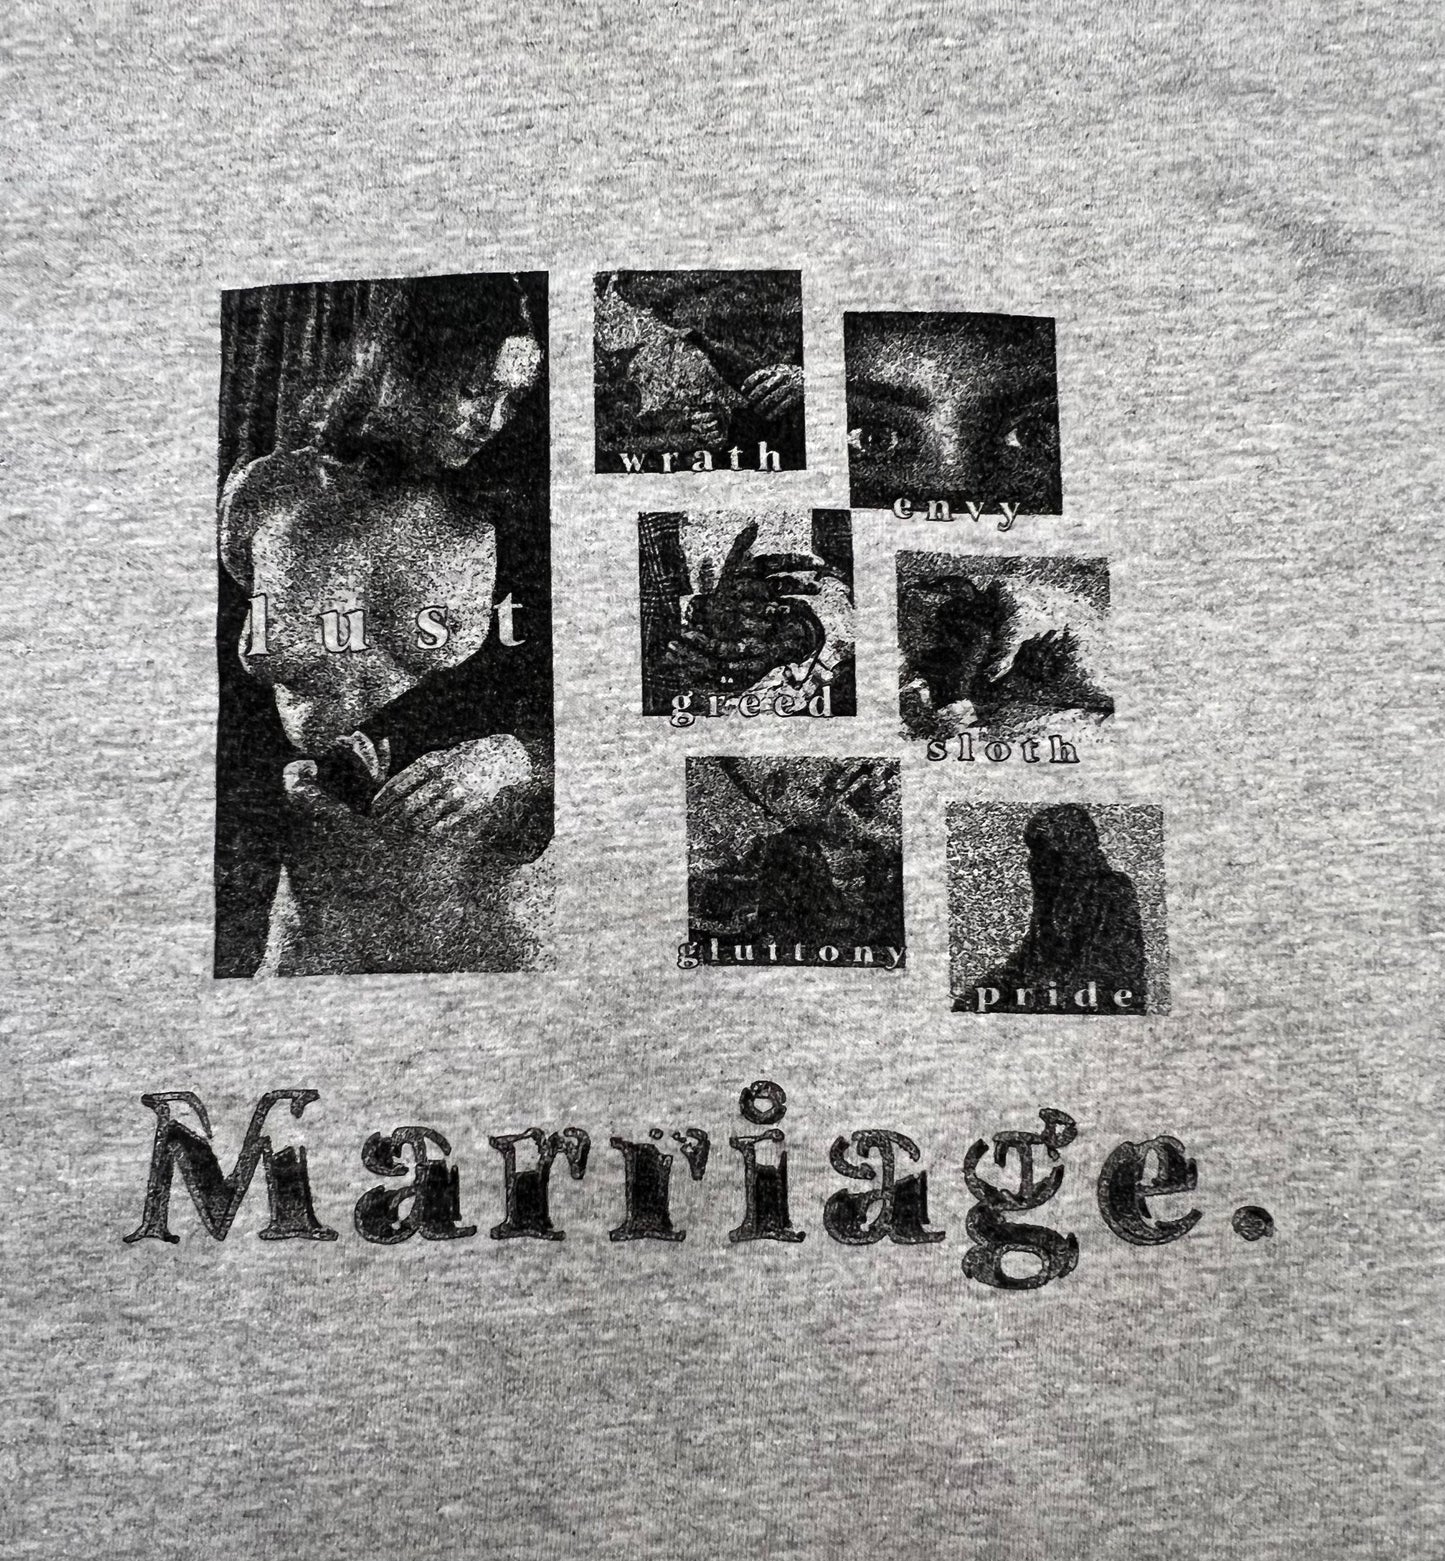 Marriage 7 Deadly Sins T Shirt (grey)